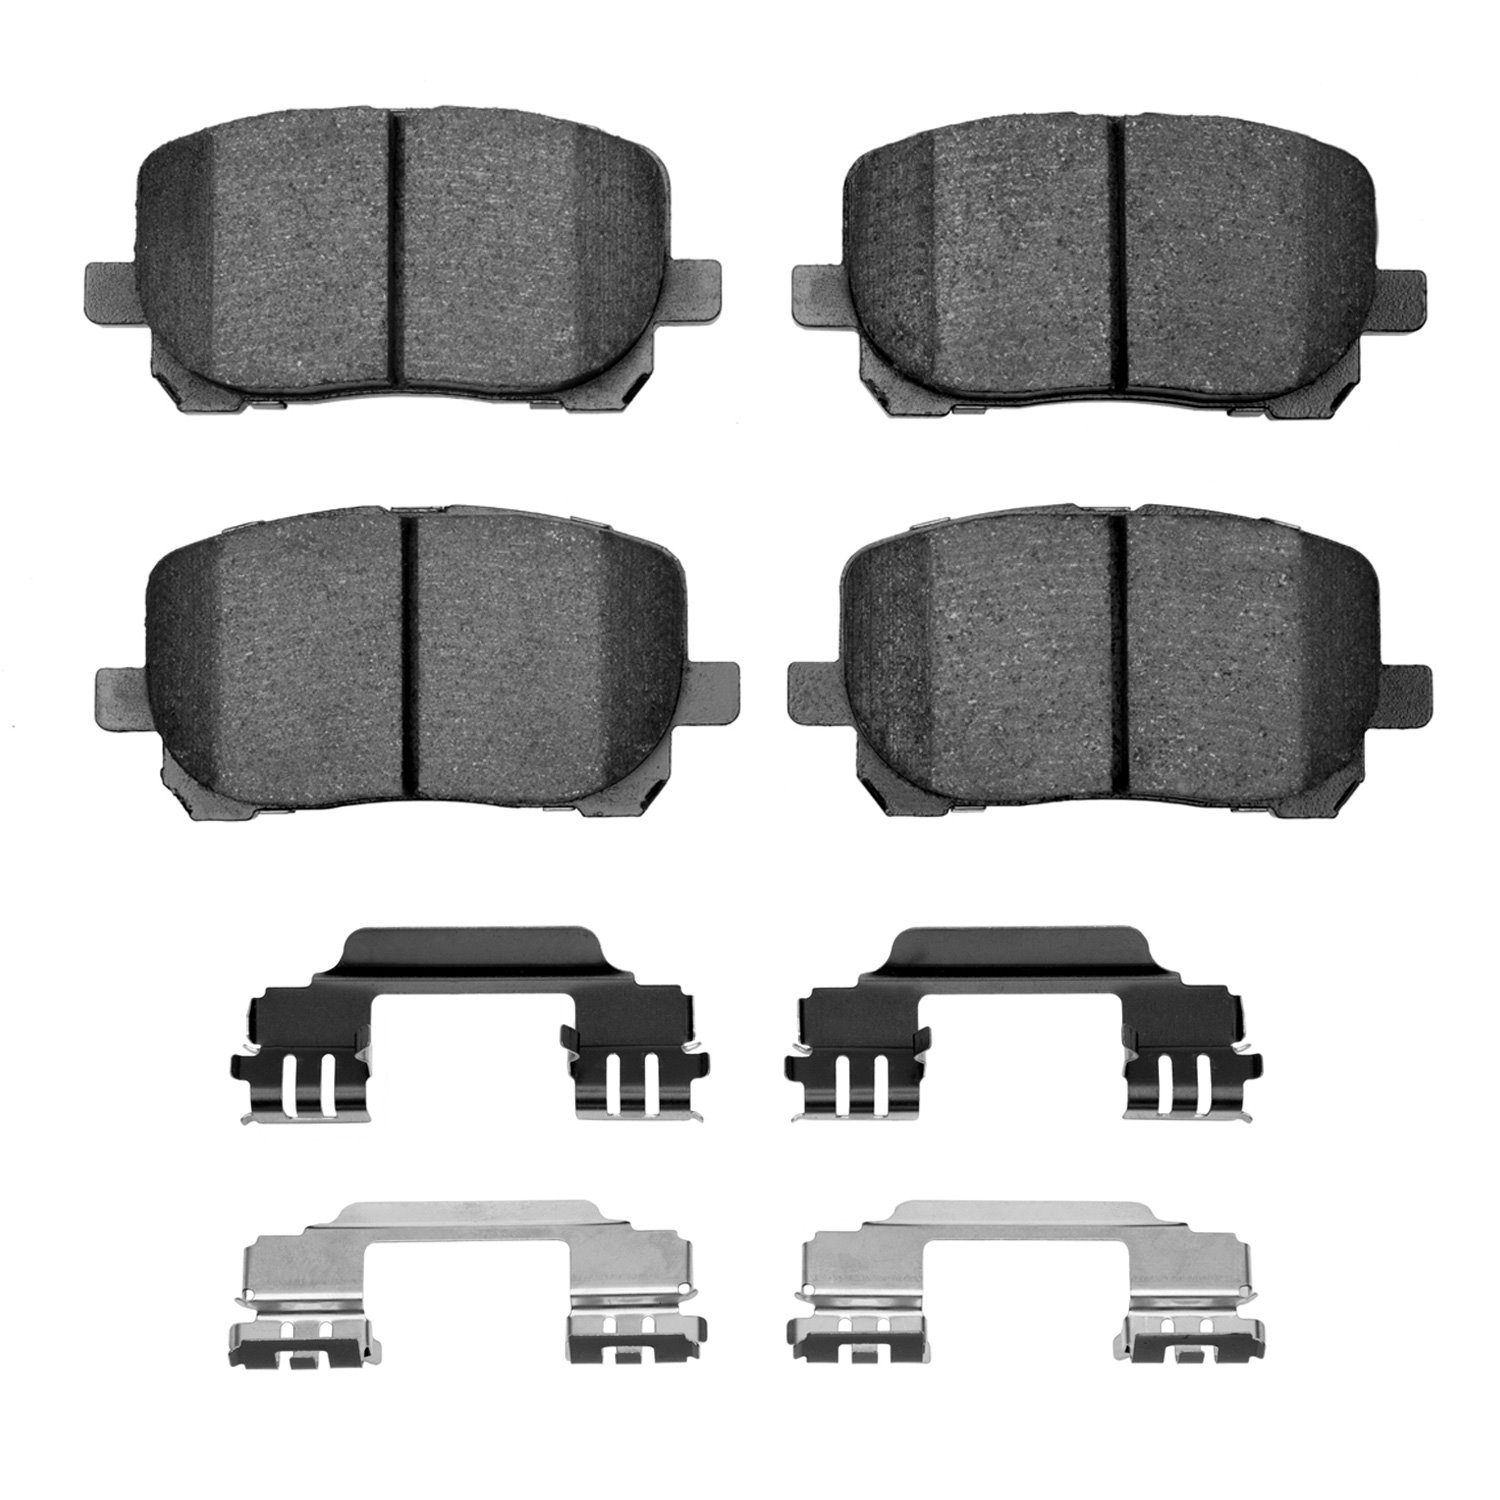 1310-0923-01 3000-Series Ceramic Brake Pads & Hardware Kit, 2003-2008 Multiple Makes/Models, Position: Front